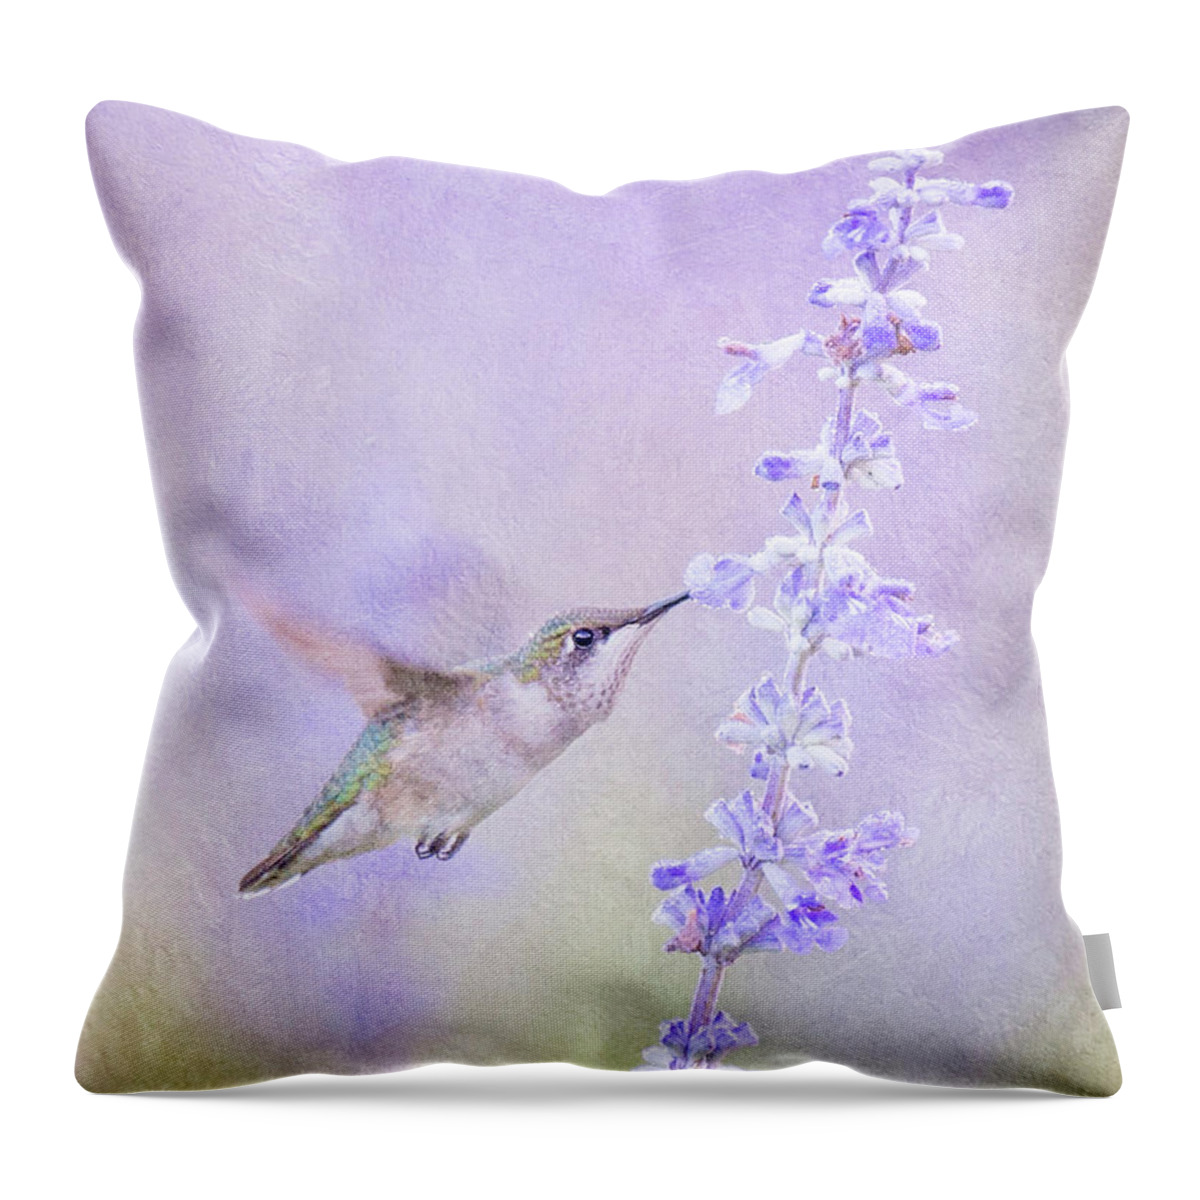 Hummingbird Throw Pillow featuring the digital art Hummingbird in flight by Diana Van Tankeren